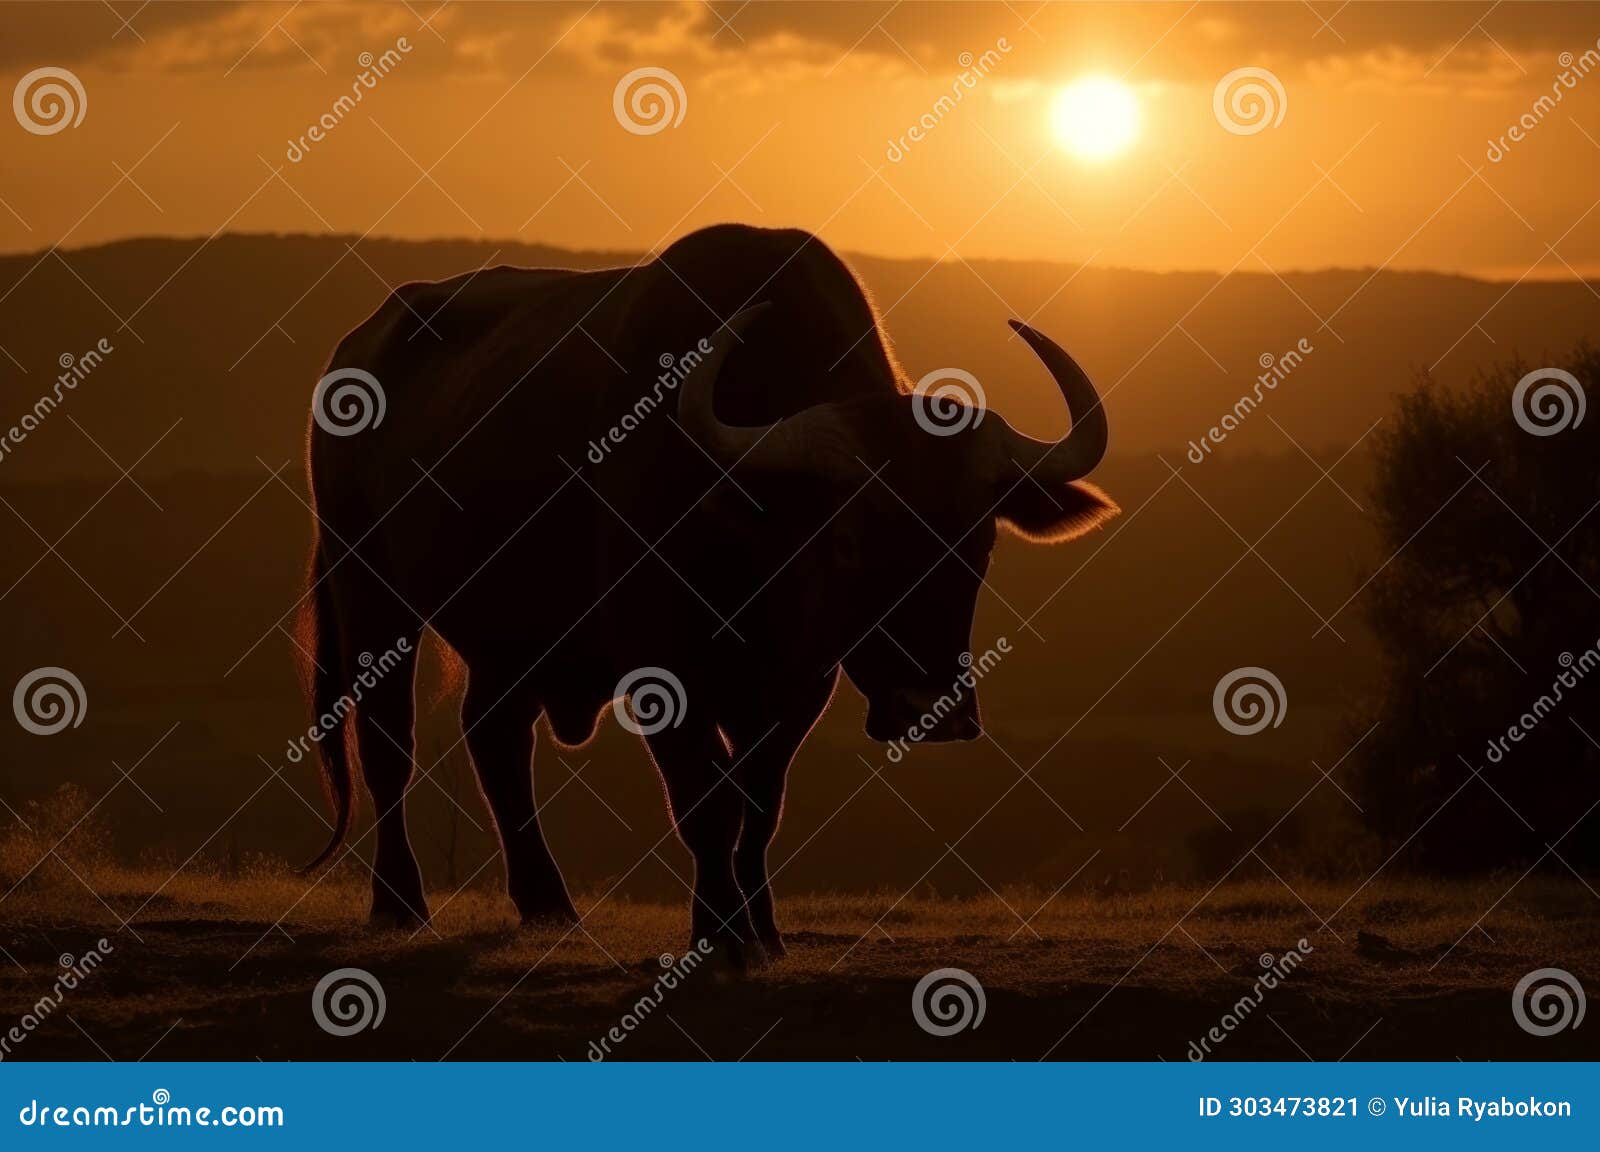 spanish toro bull on field with scenic sunset view. generate ai